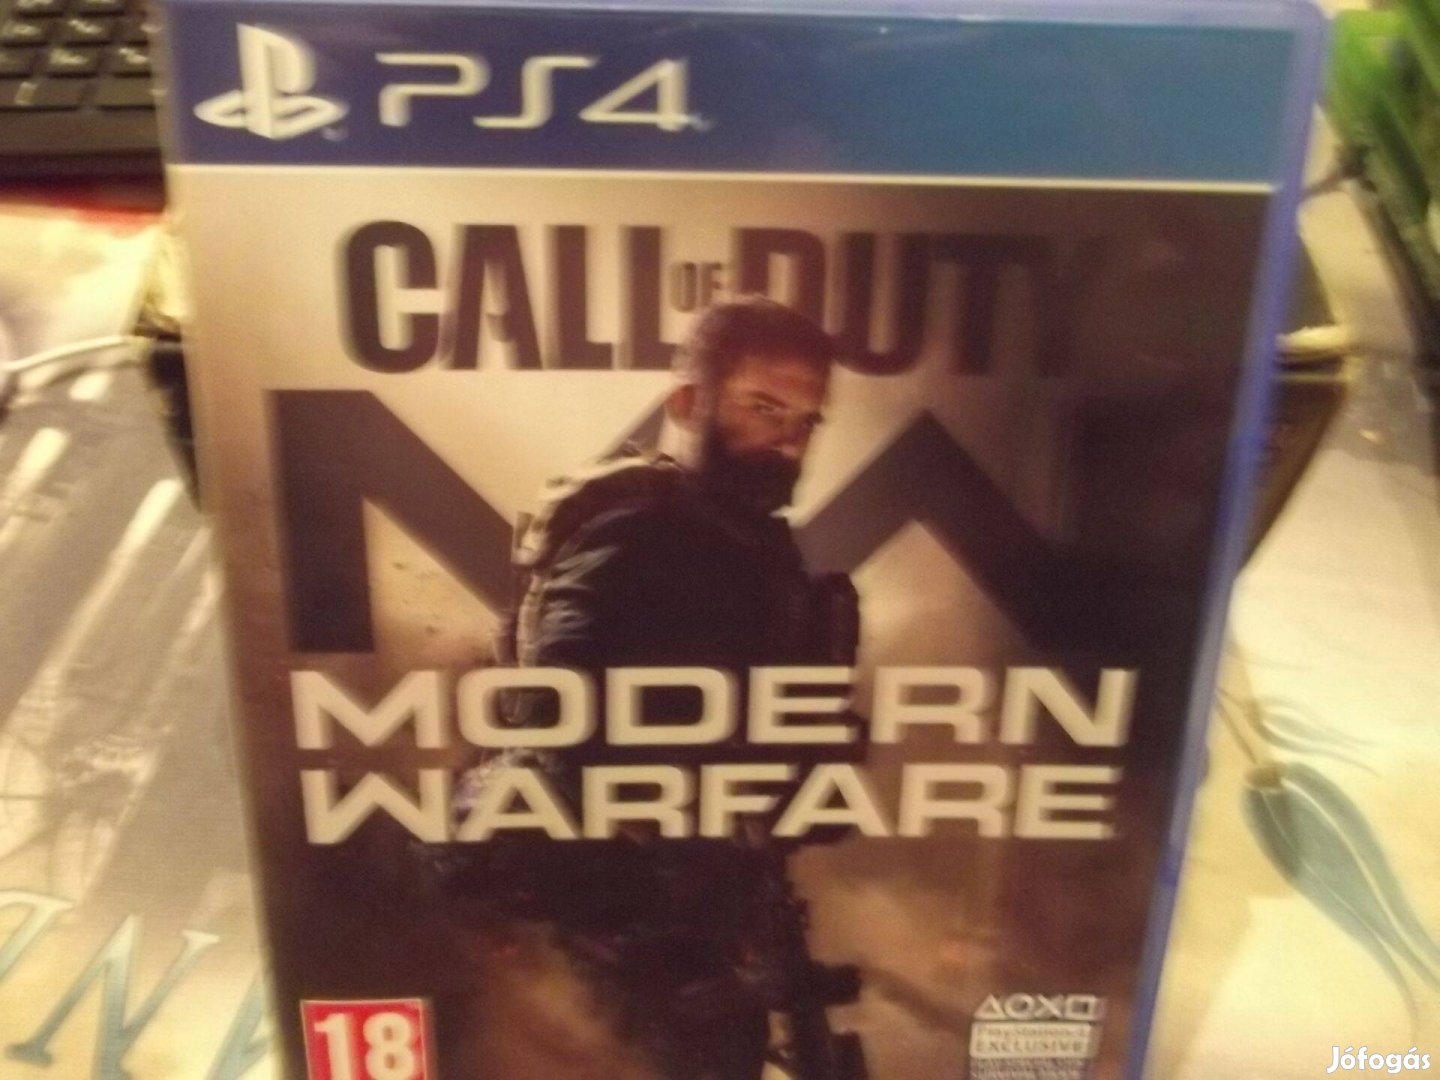 Ps4-150 Ps4 eredeti Játék : . Call of Duty Modern Warfare ( karcmente